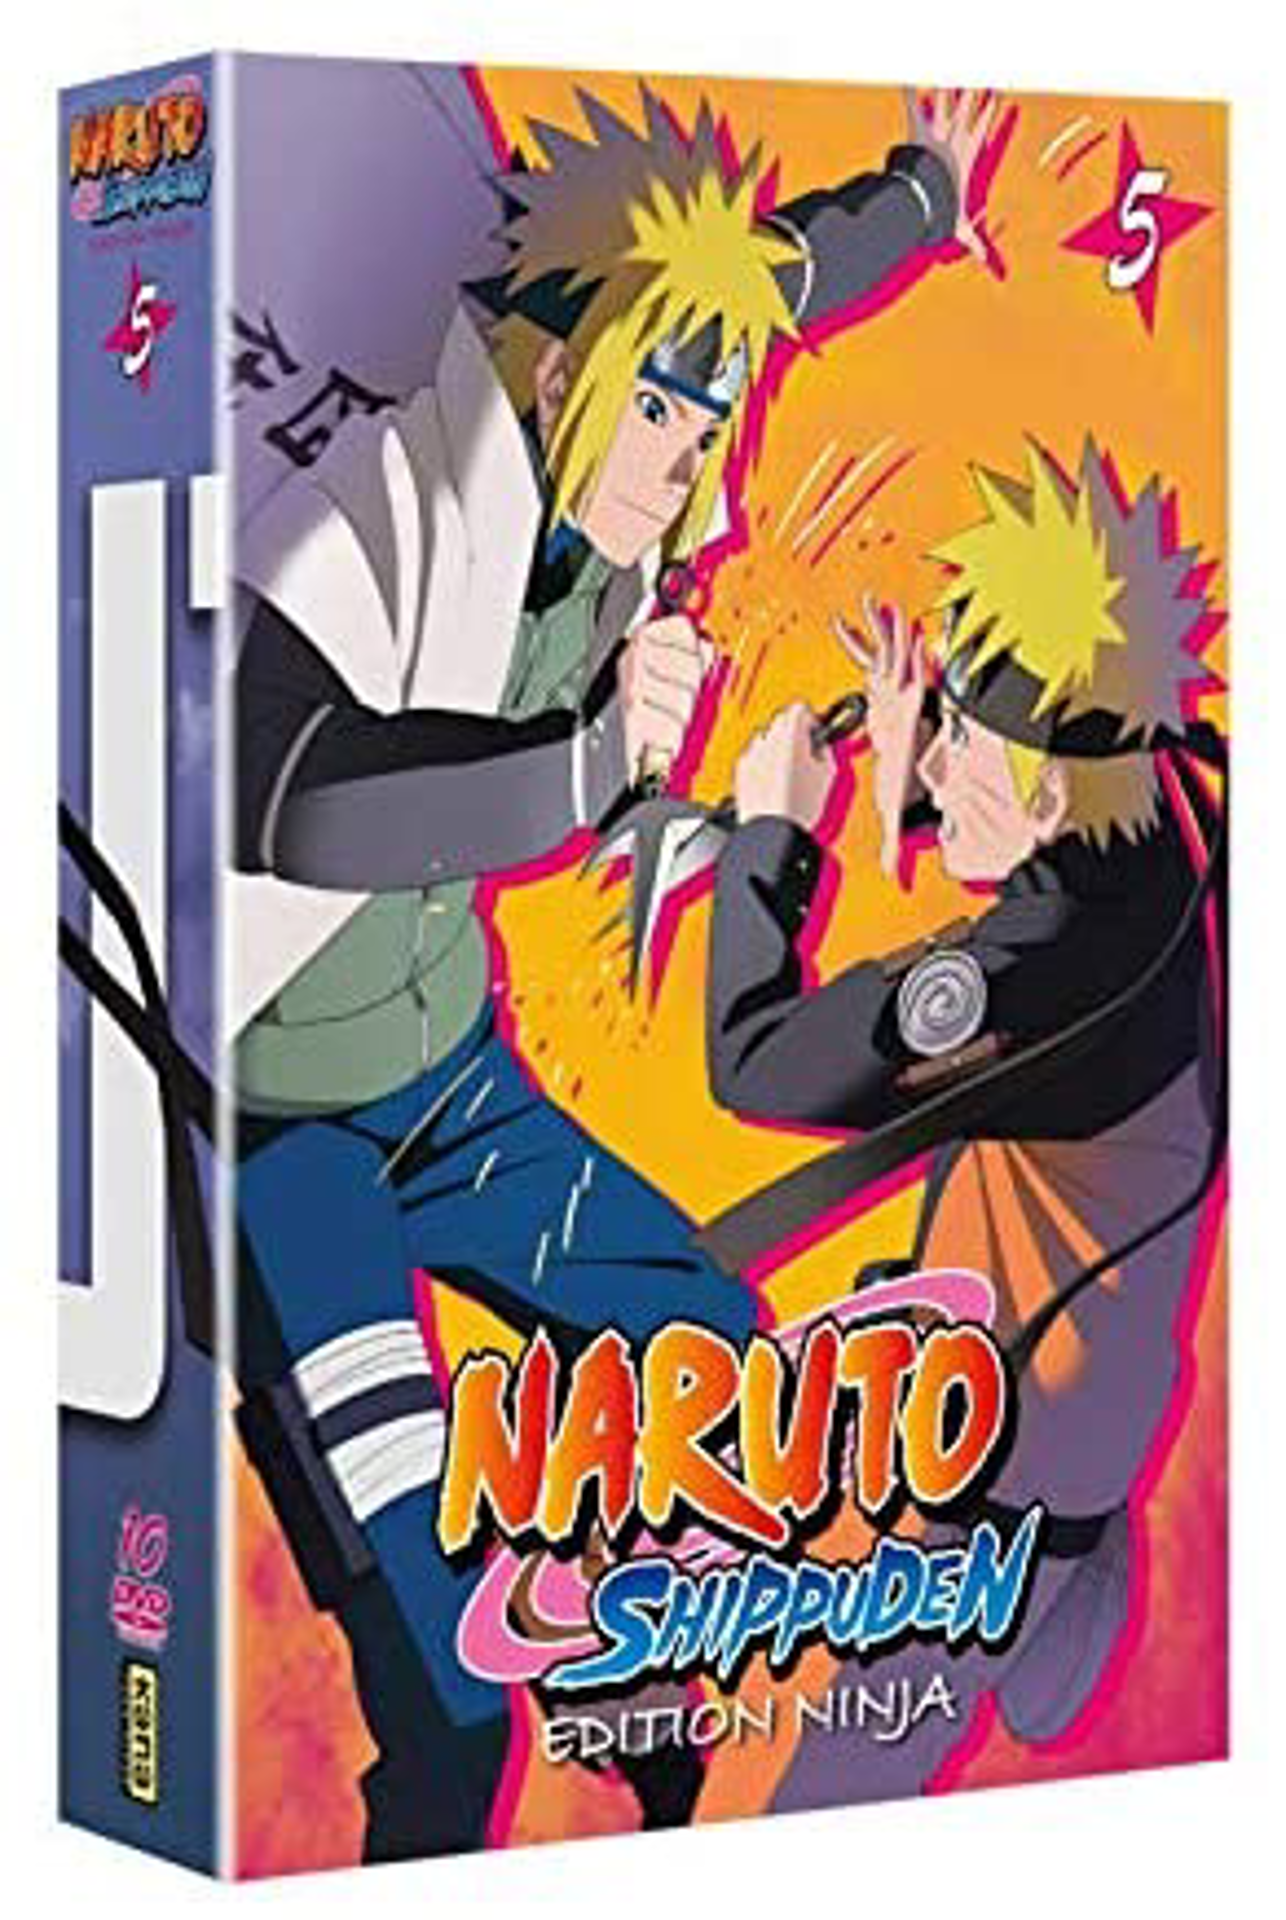 Naruto Shippuden -Edition ninja coffret 5